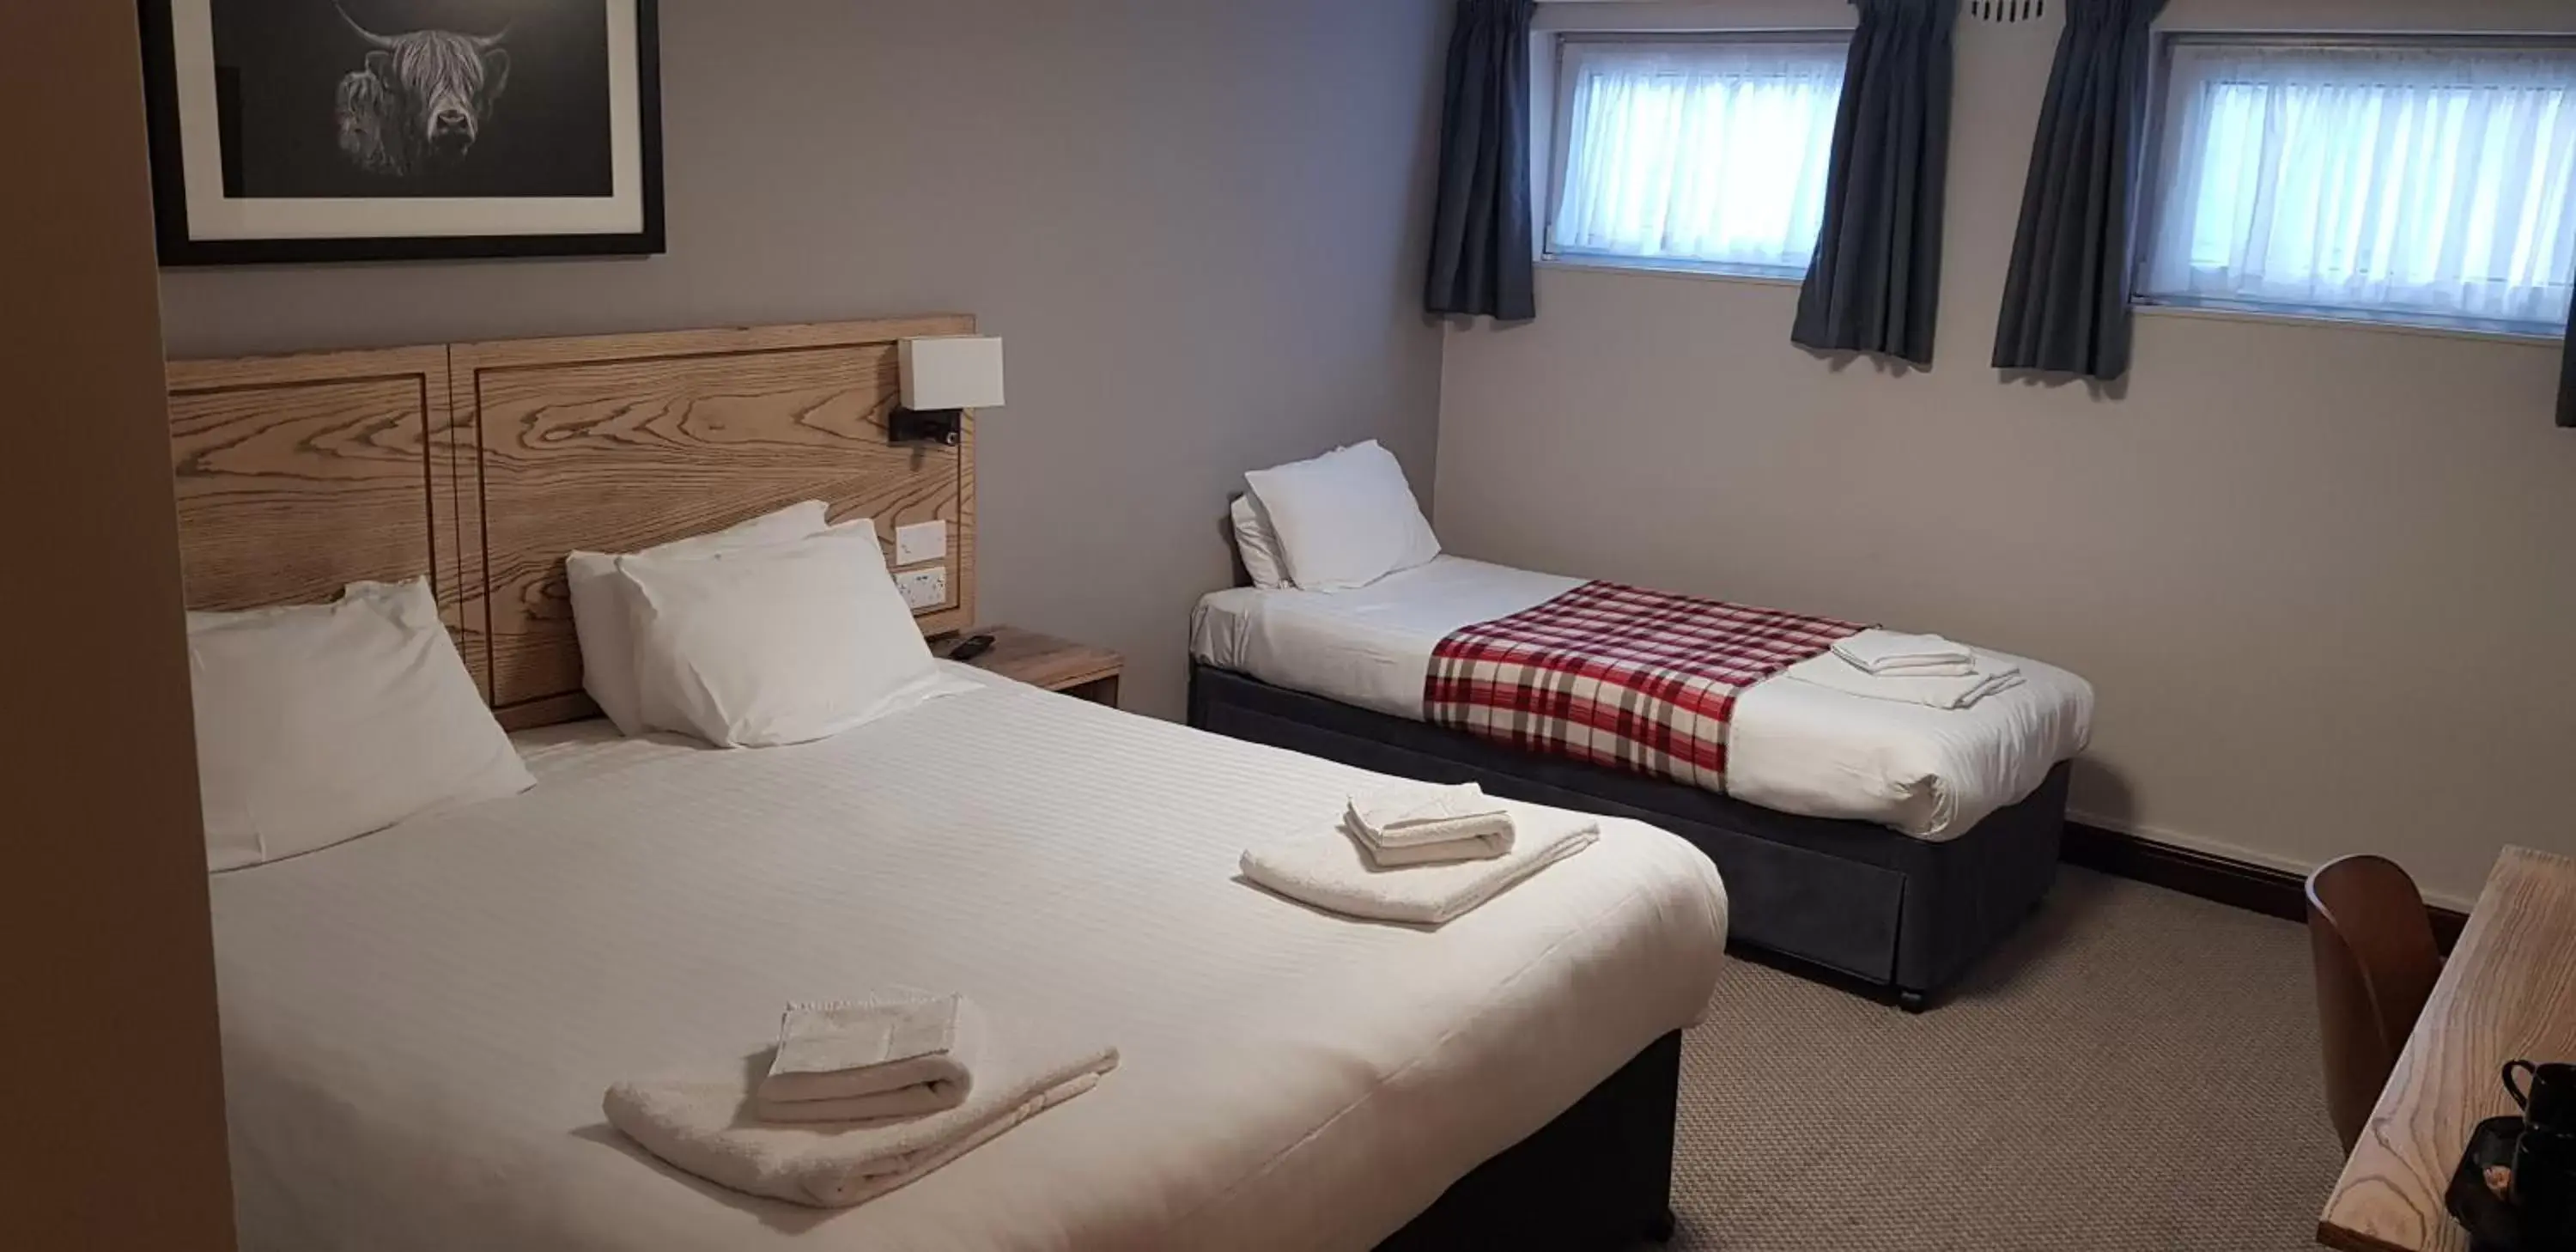 Bedroom, Bed in Waterloo Cross, Devon by Marston's Inns